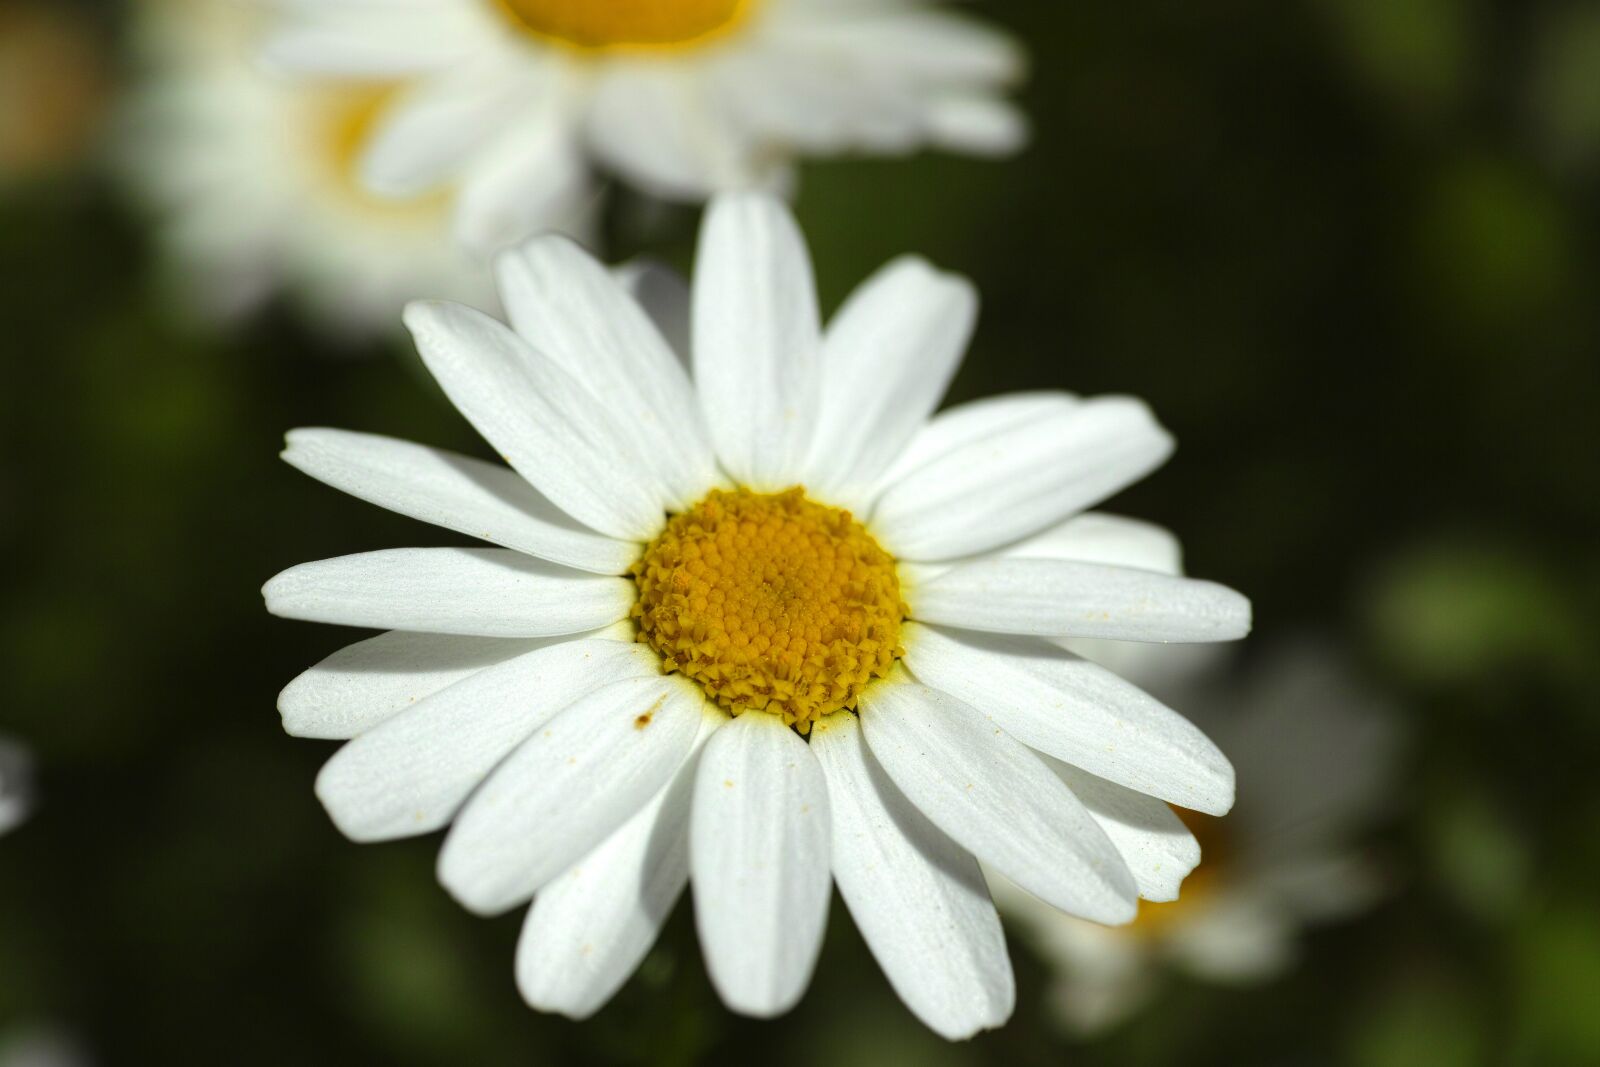 Sigma DP3 Merrill sample photo. Daisy, flower, macro photography